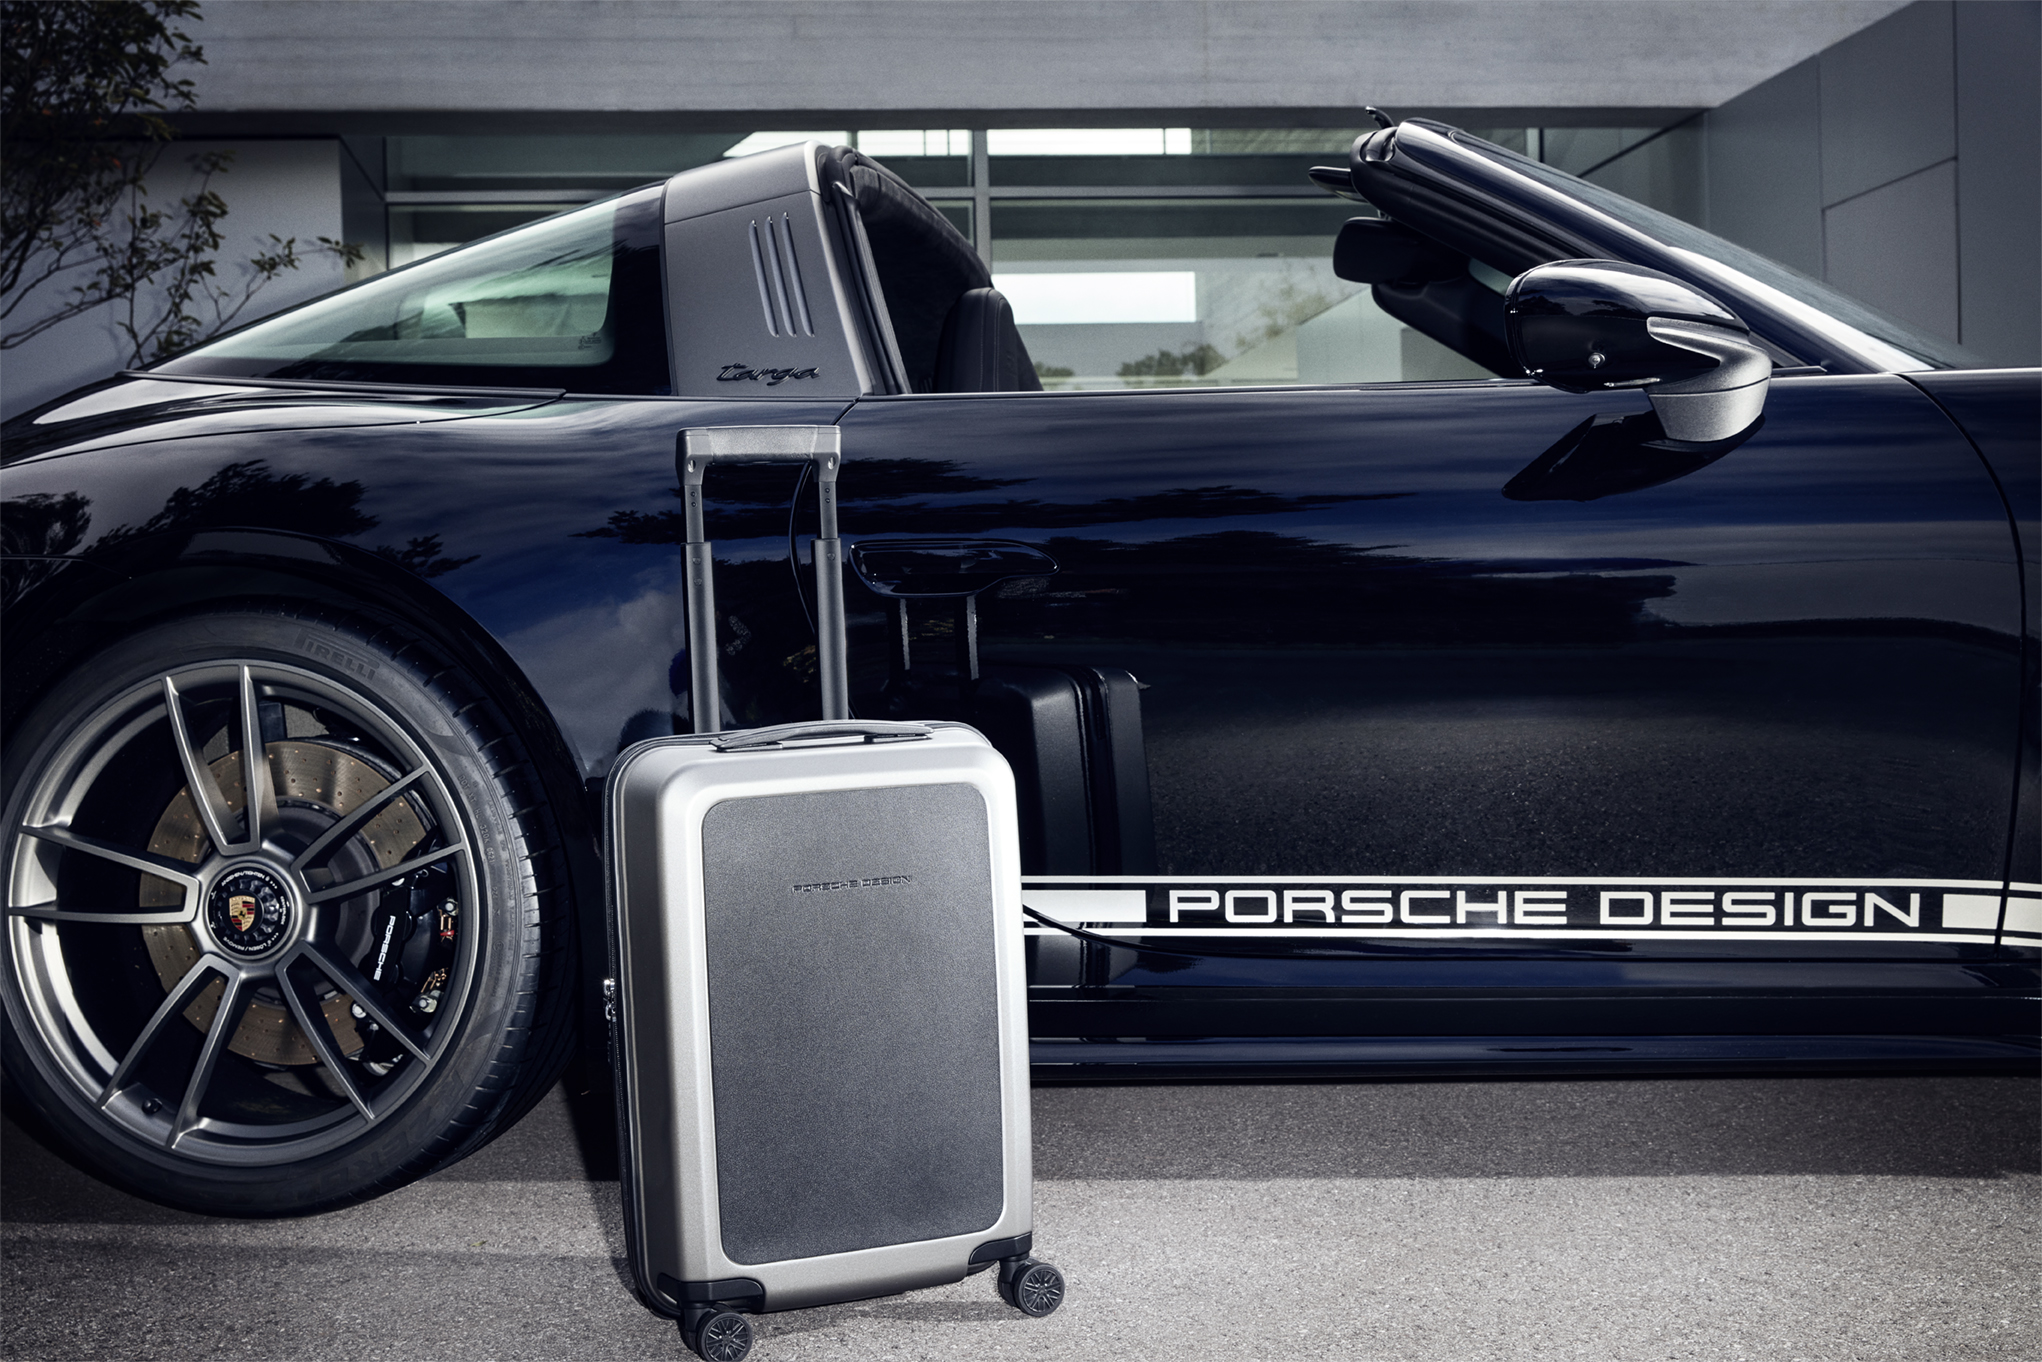 Porsche Lifestyle luggage.